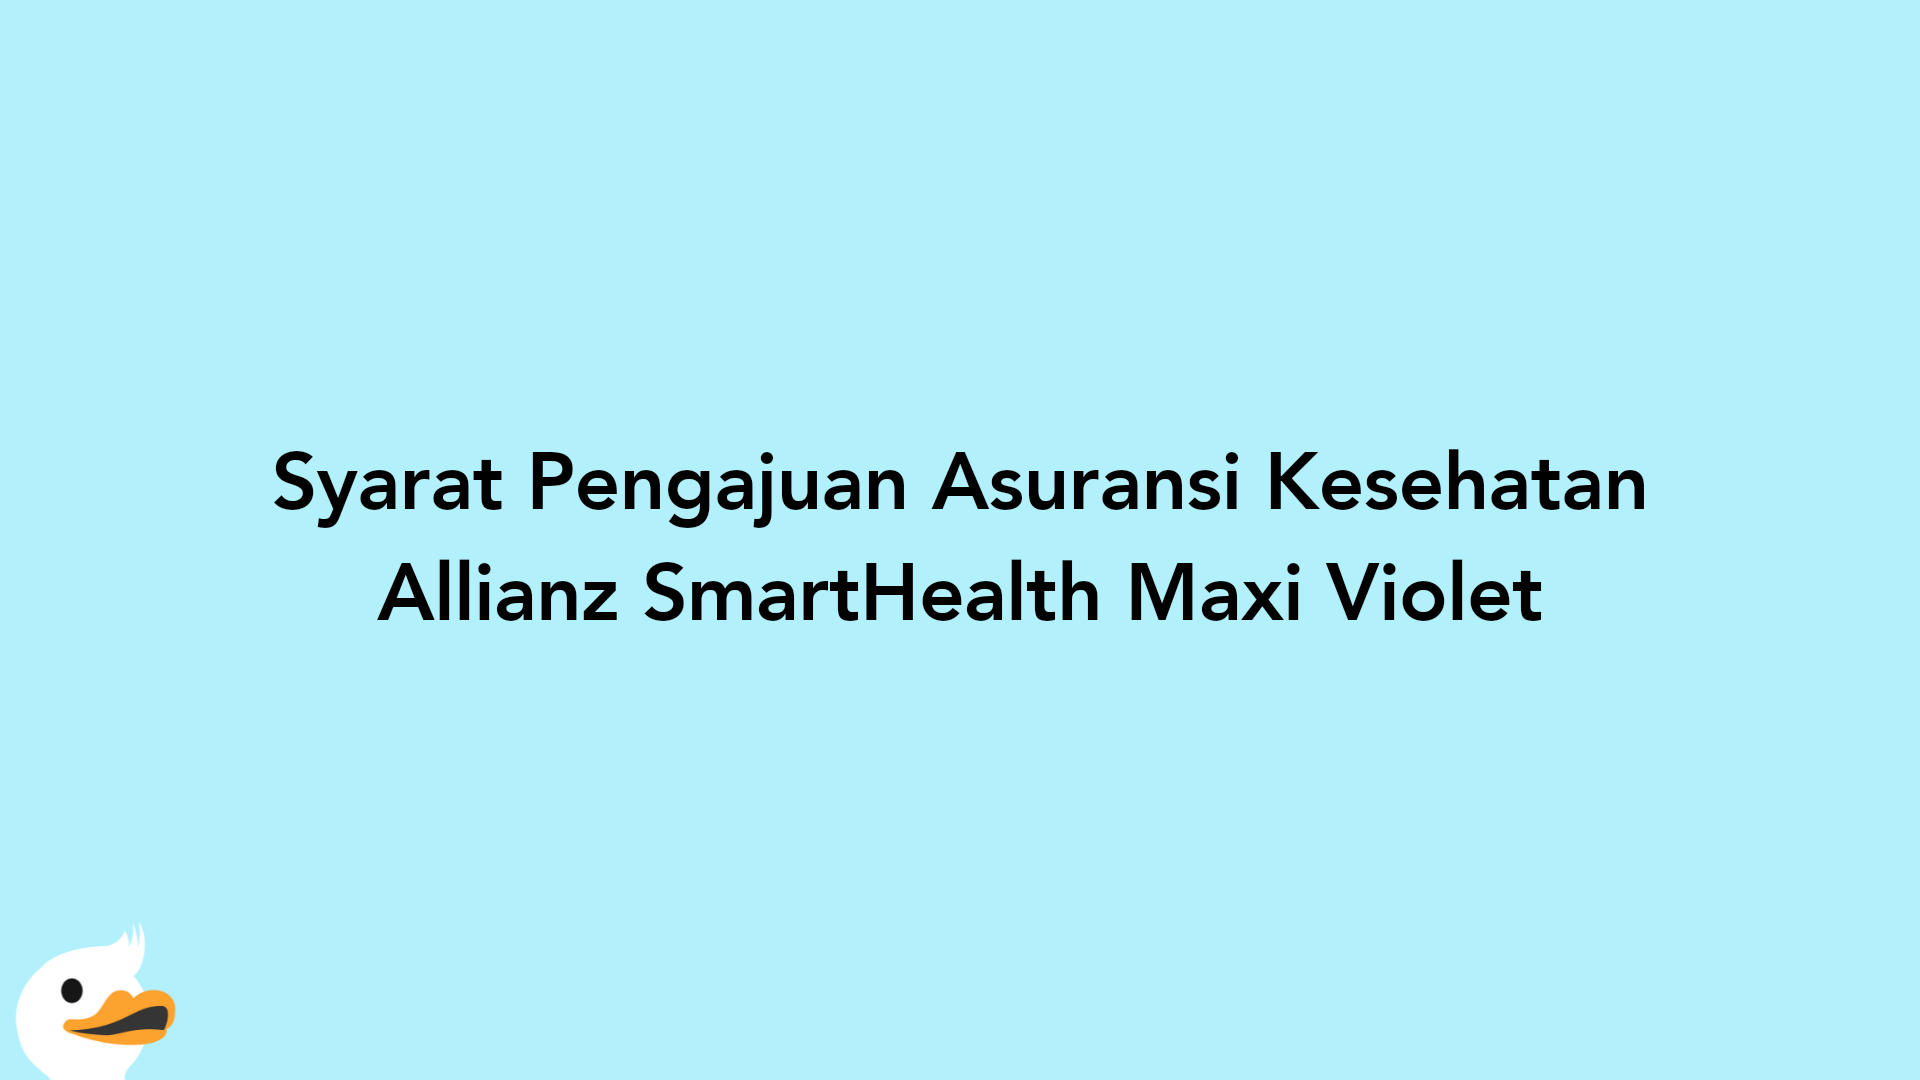 Syarat Pengajuan Asuransi Kesehatan Allianz SmartHealth Maxi Violet